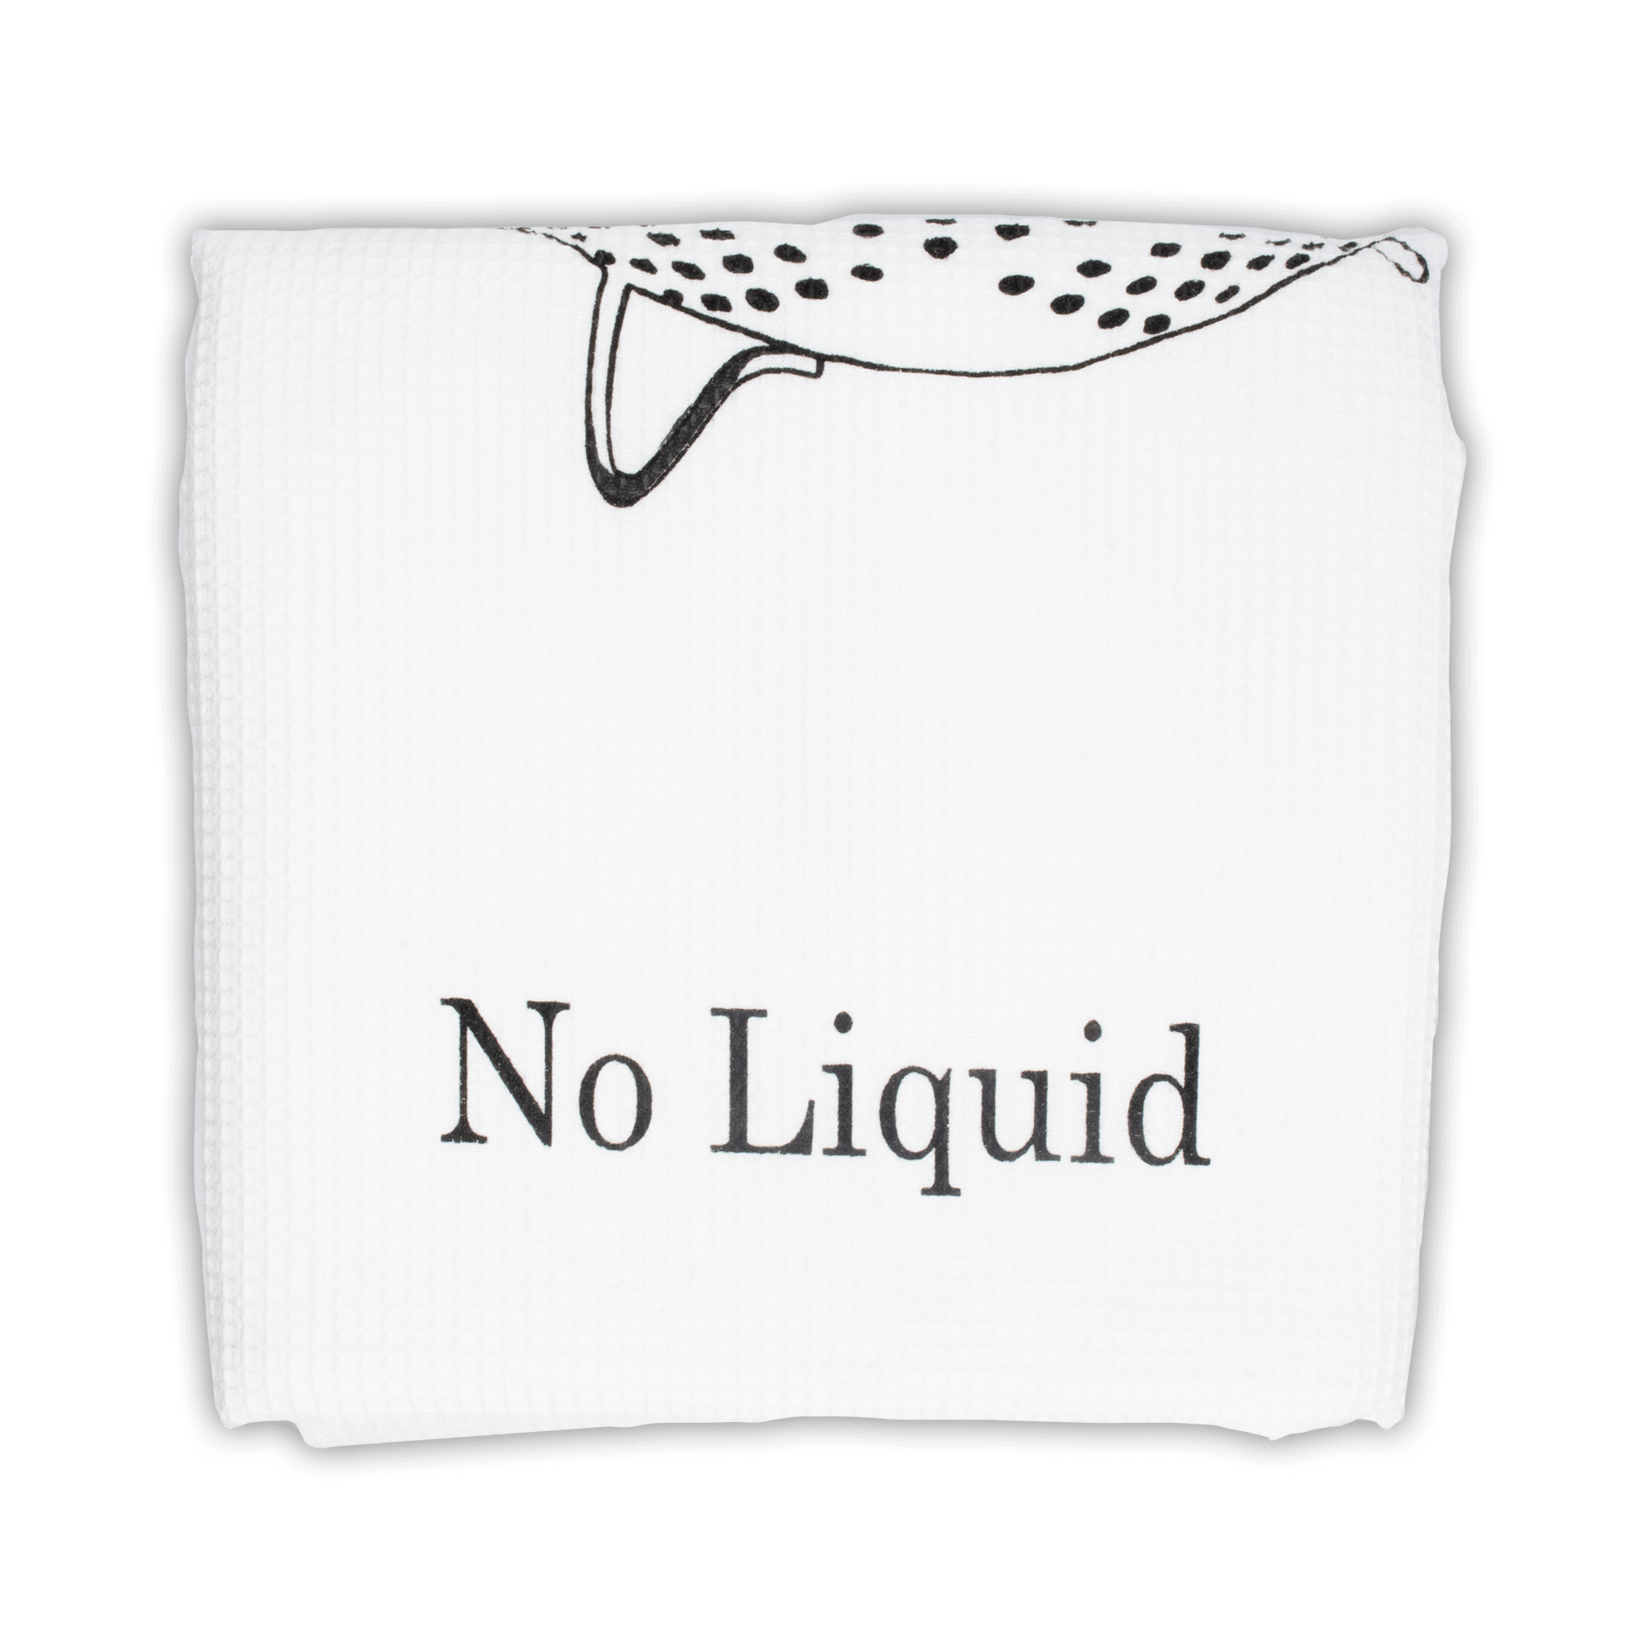 DDDDD DDDDD Tea Towel - No Liquid